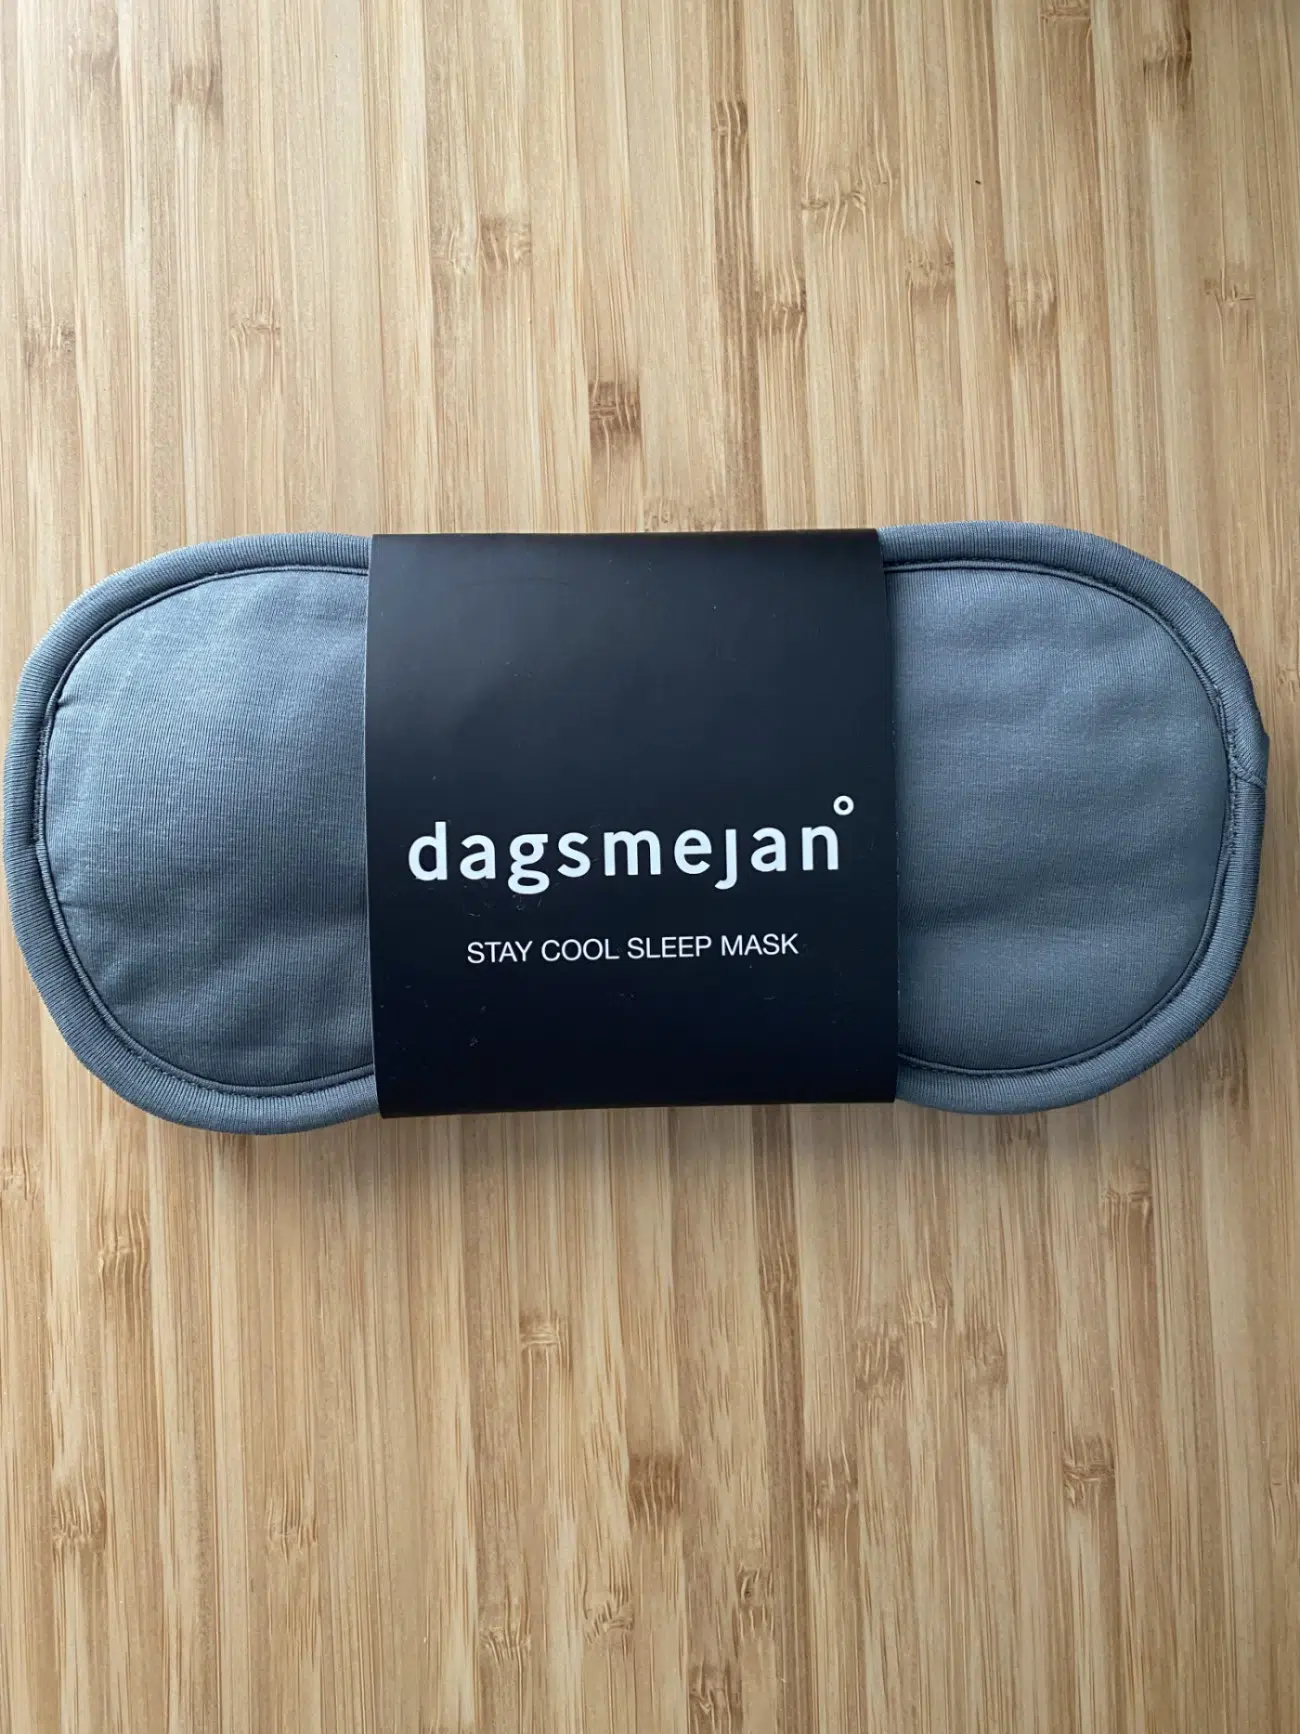 Dagsmejan Stay Cool Sleep Mask packaging